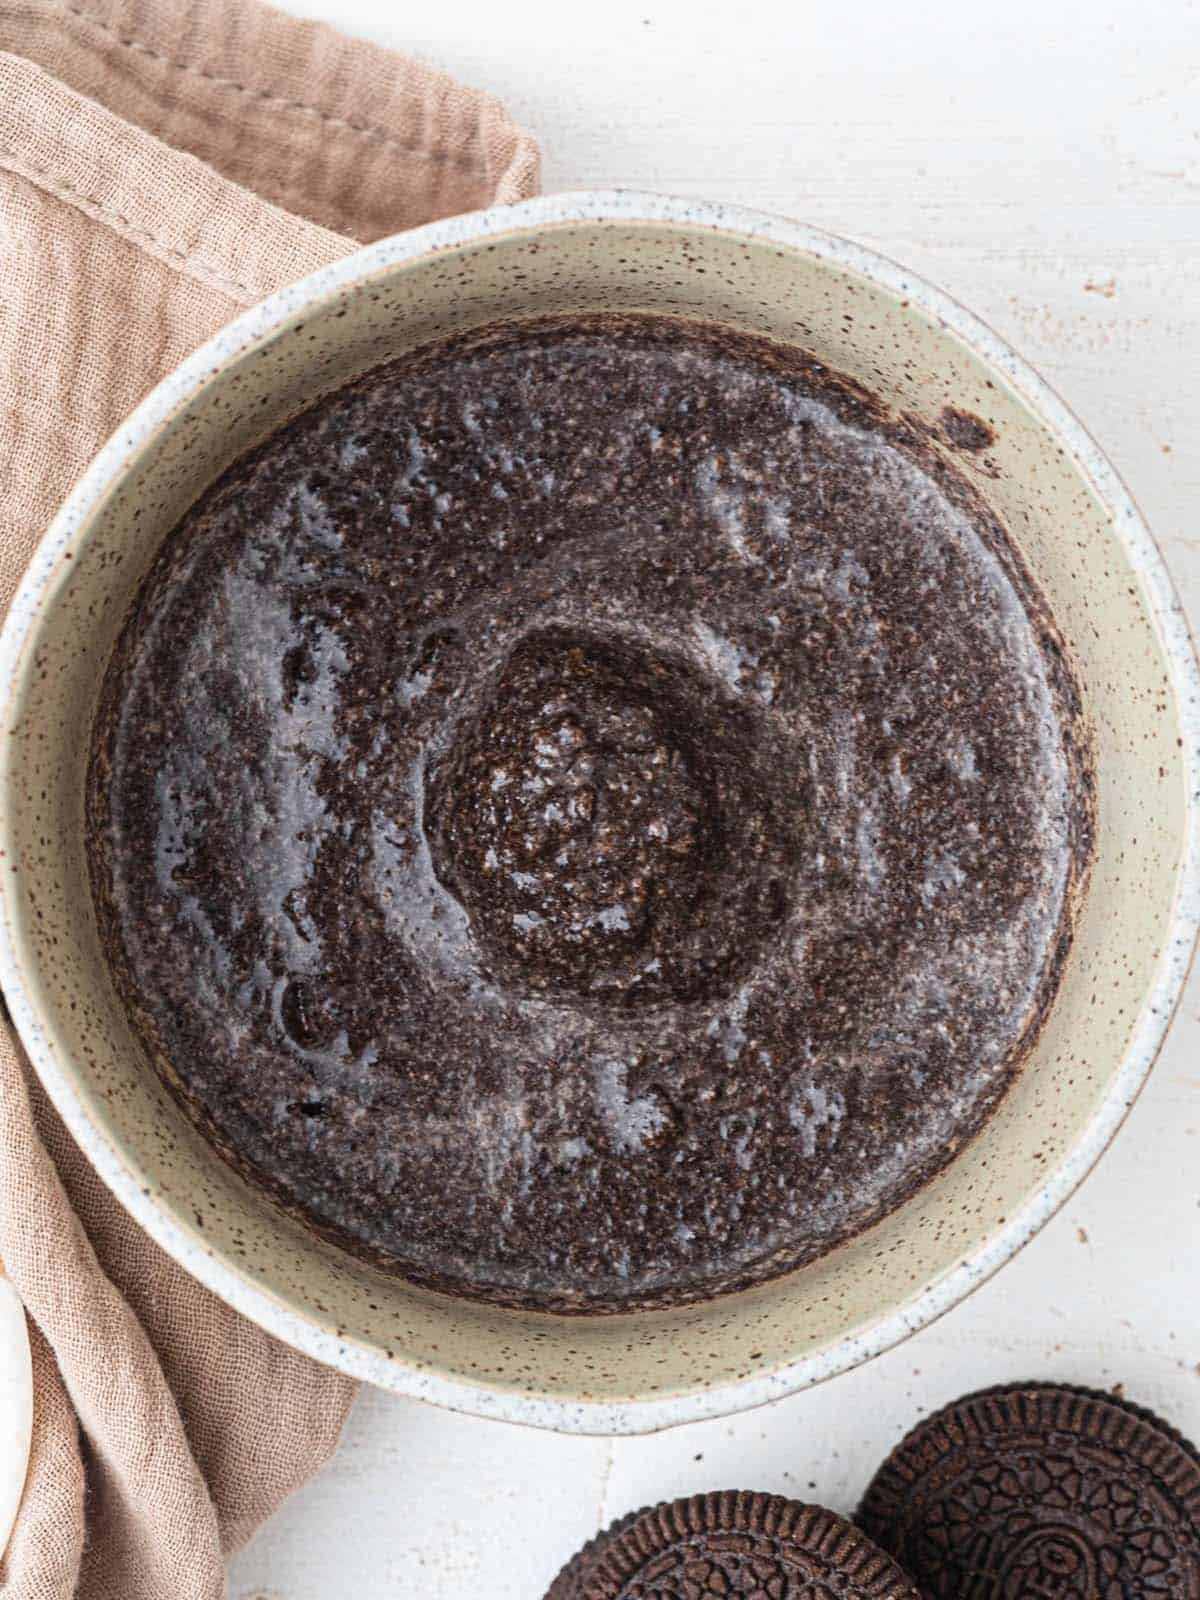 Microwave Oreo Lava Mug Cake with Ice cream an a molten chocolate center